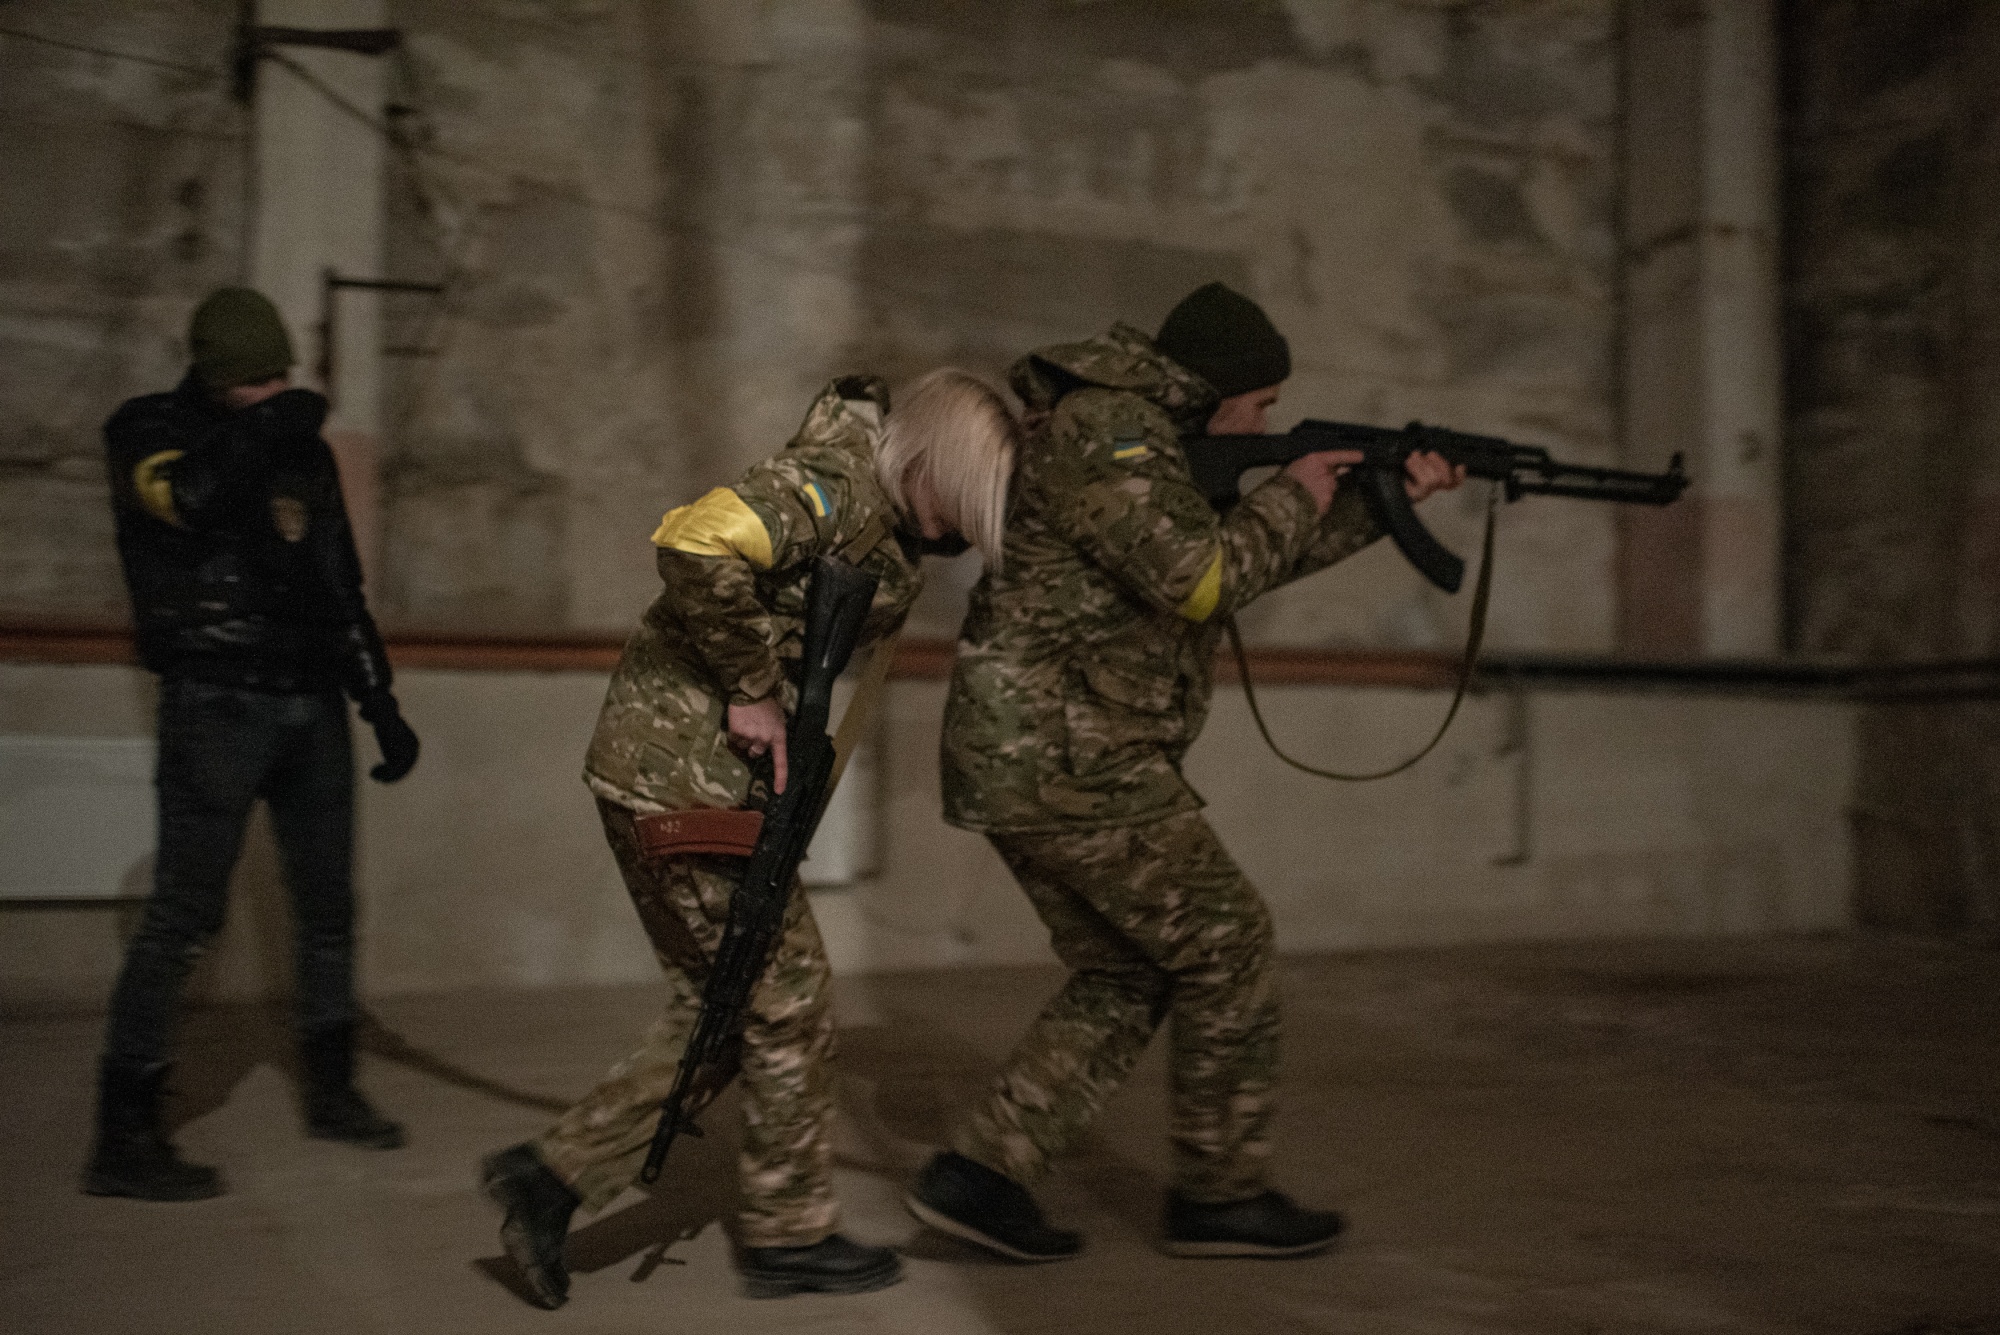 Civilians practice military training&nbsp;inside a bomb shelter&nbsp;in&nbsp;Ukraine